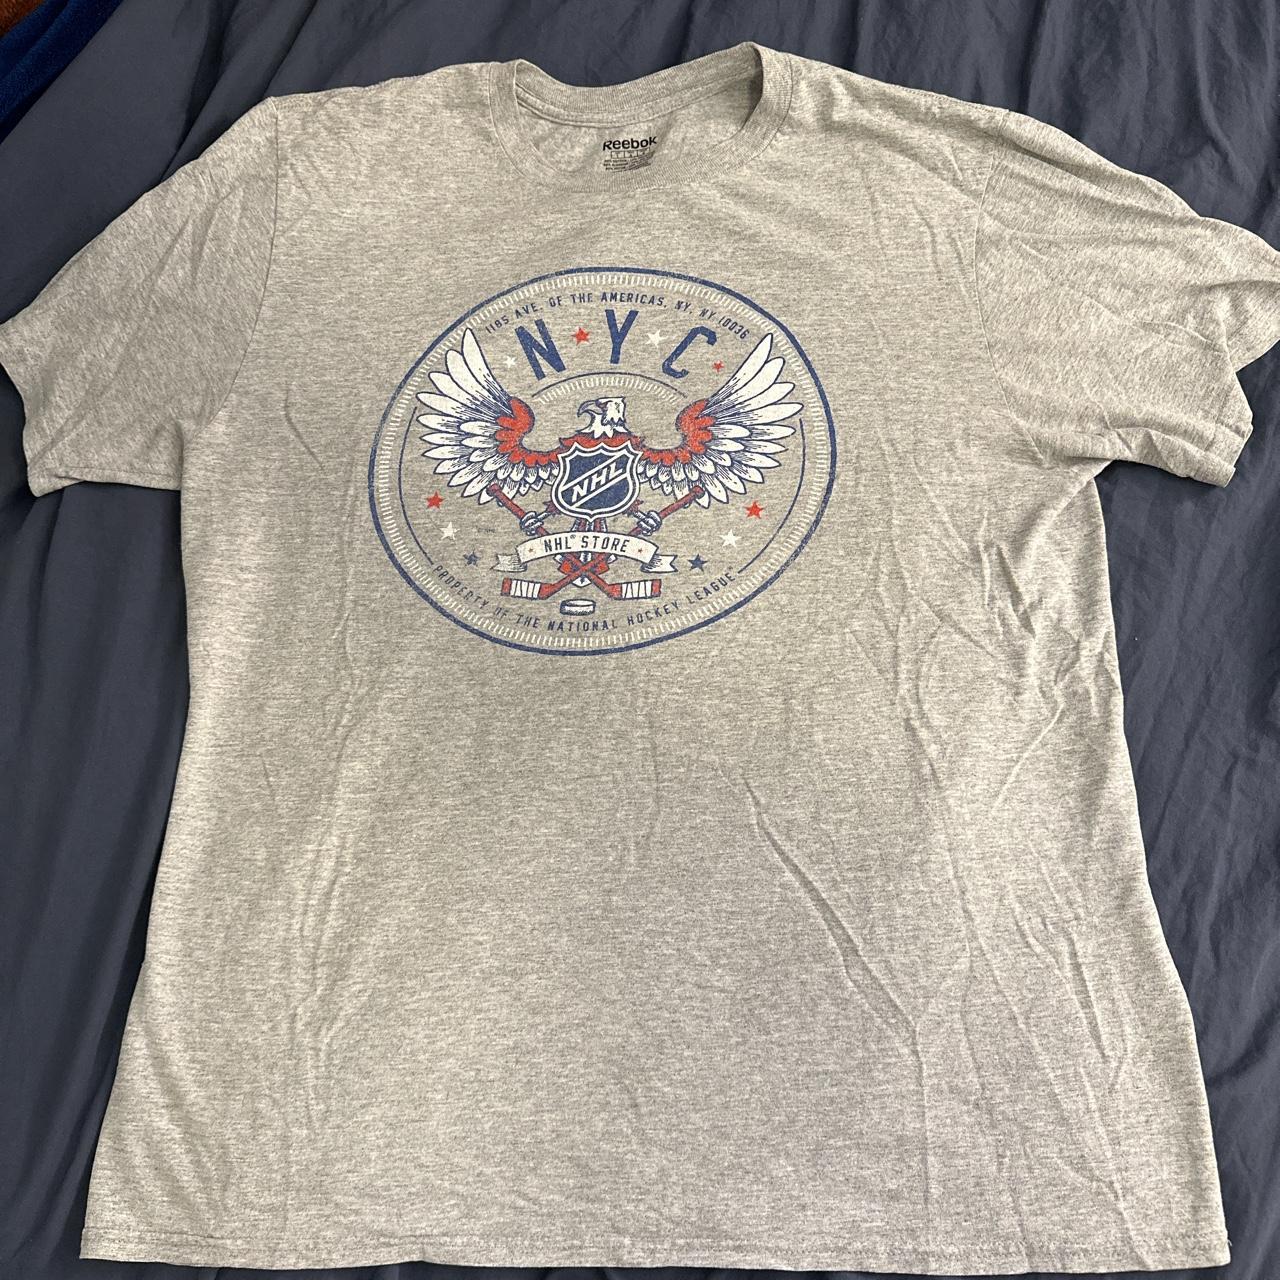 NHL Store T-shirt from NYC #nhl #hockey #nyc - Depop